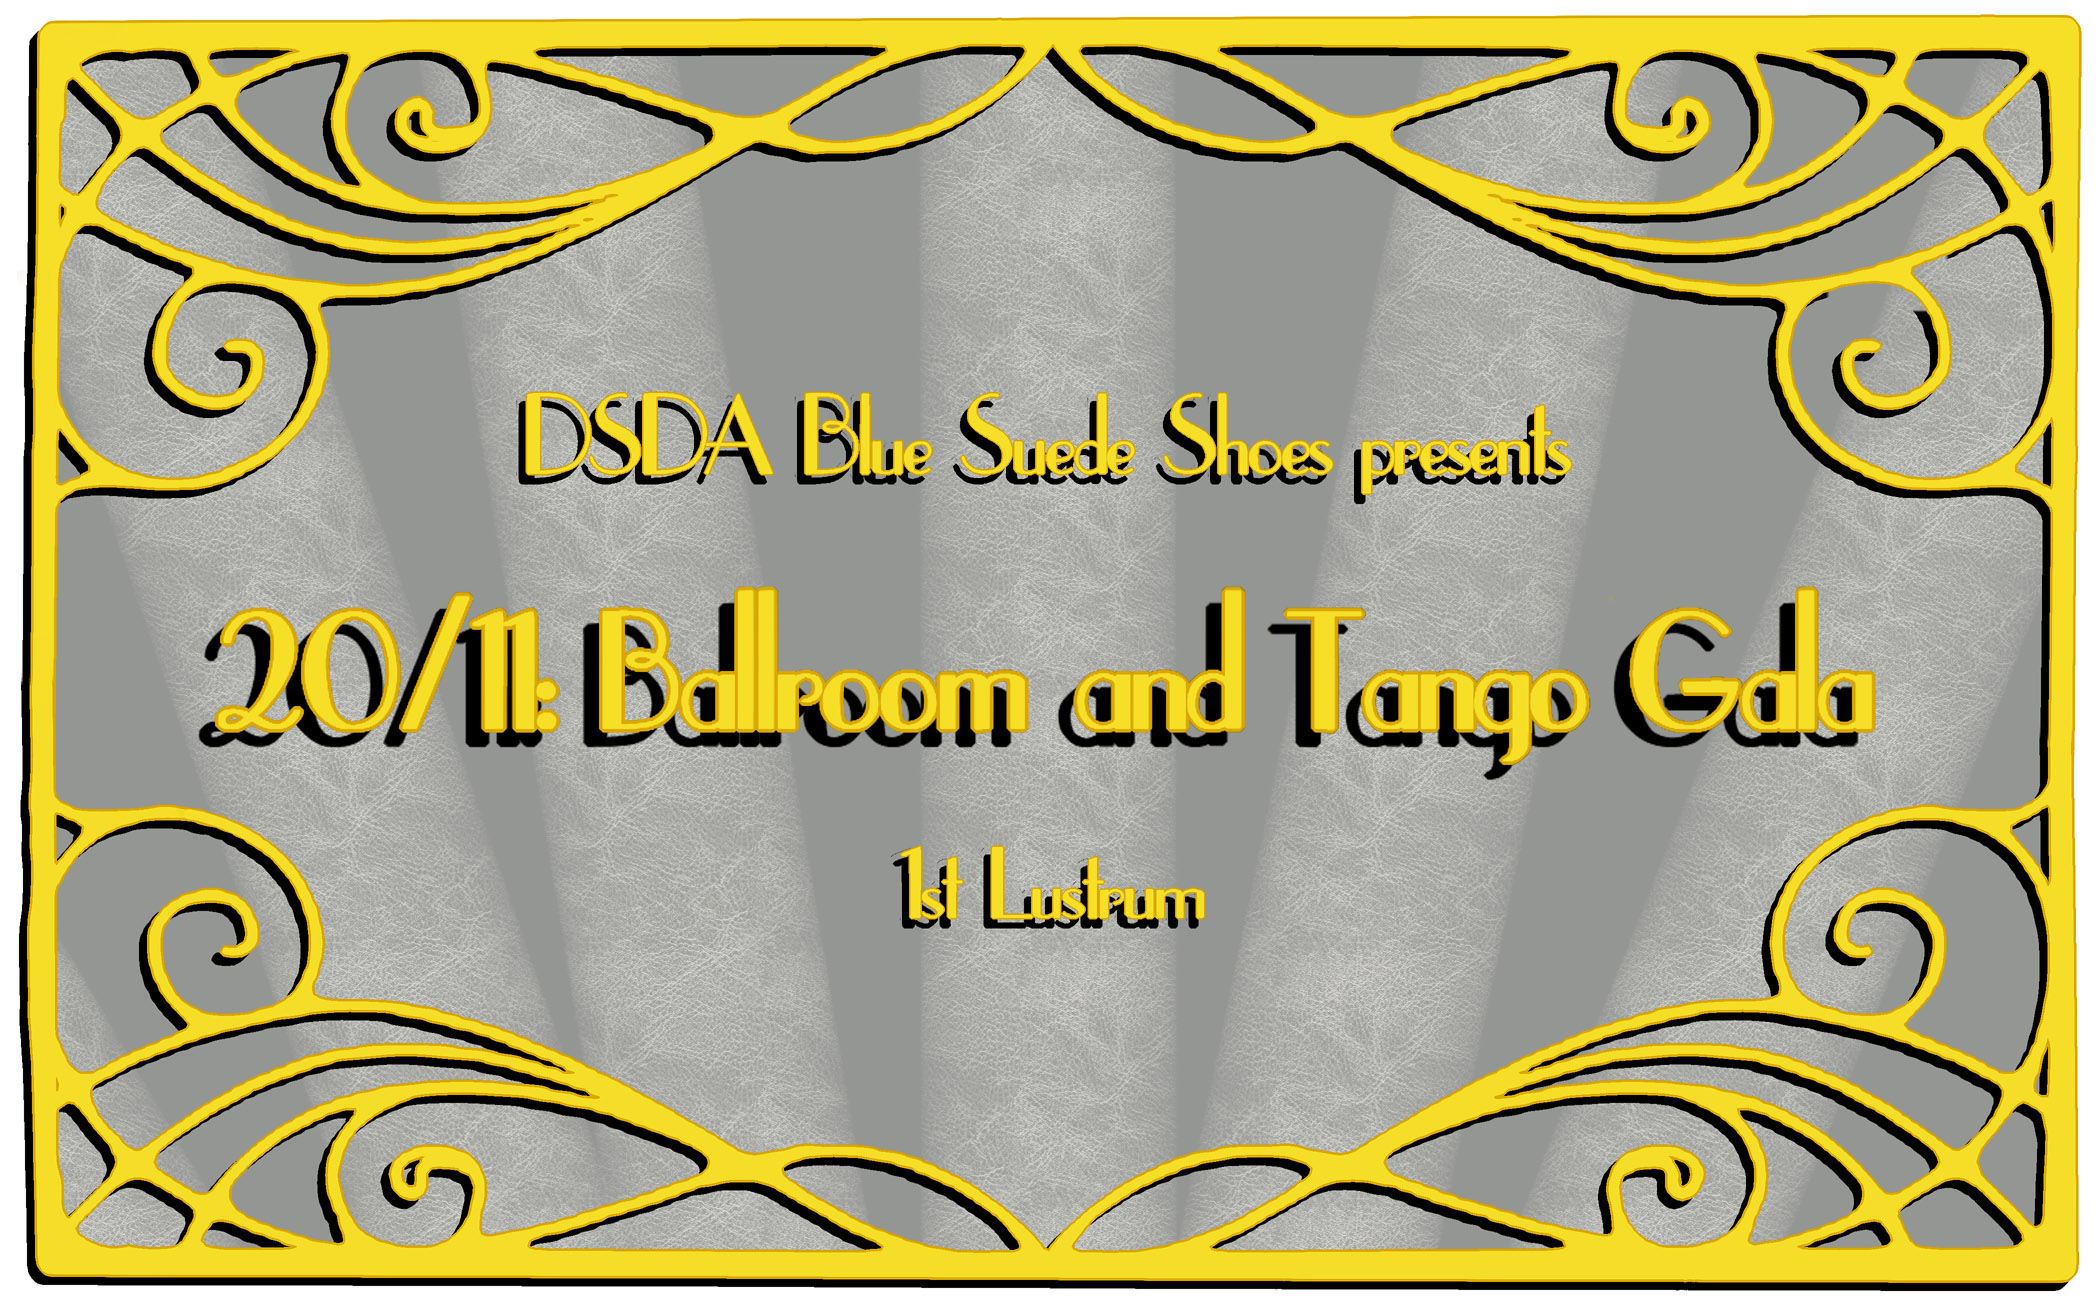 Ballroom & Tango Gala banner